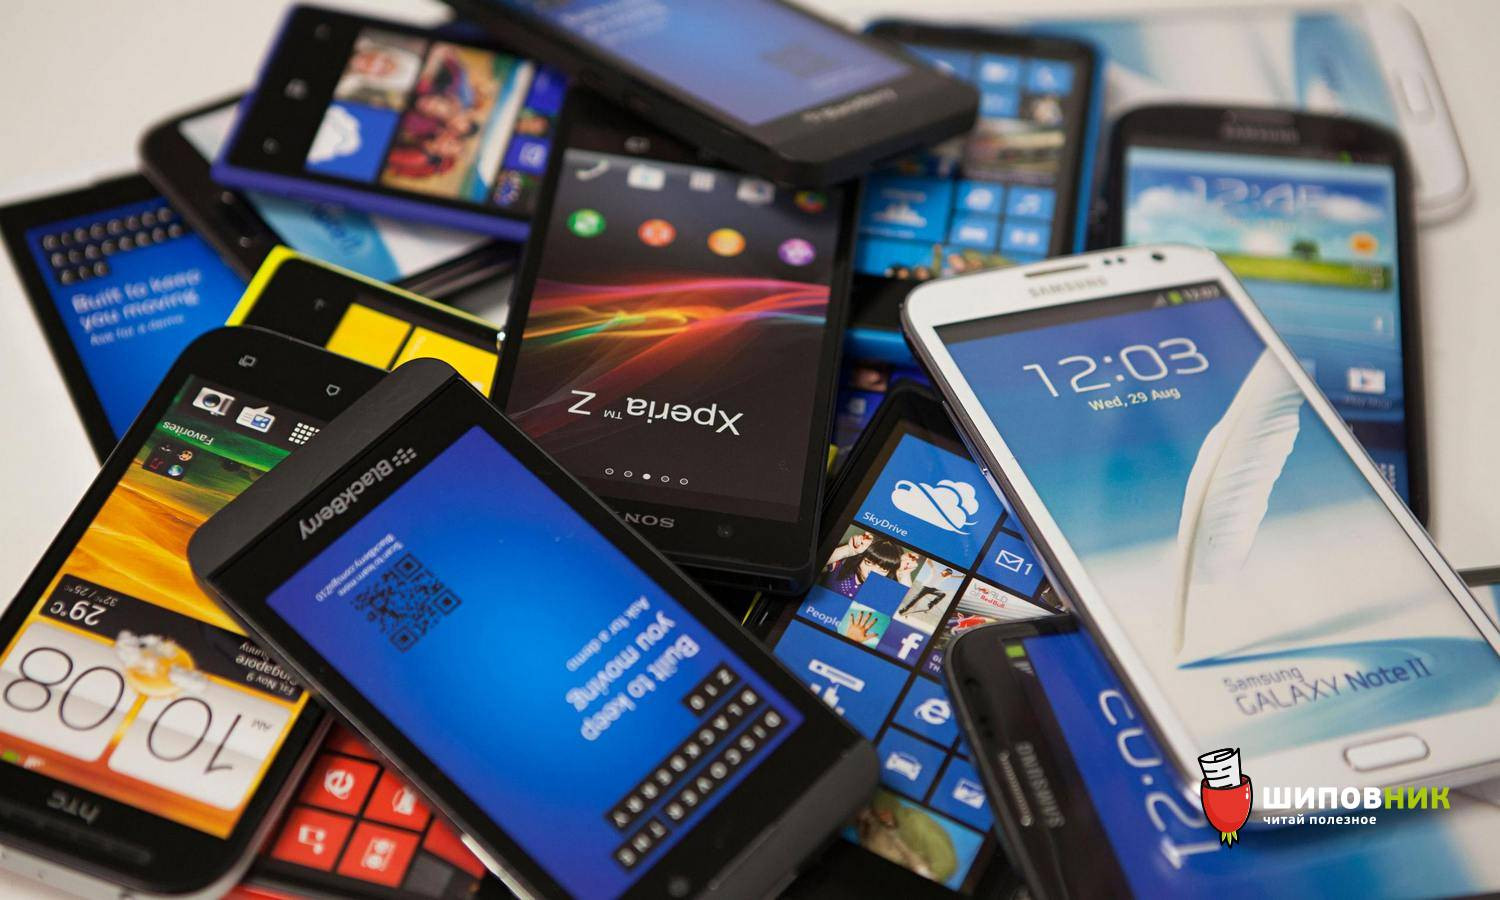 Pile of smart phones